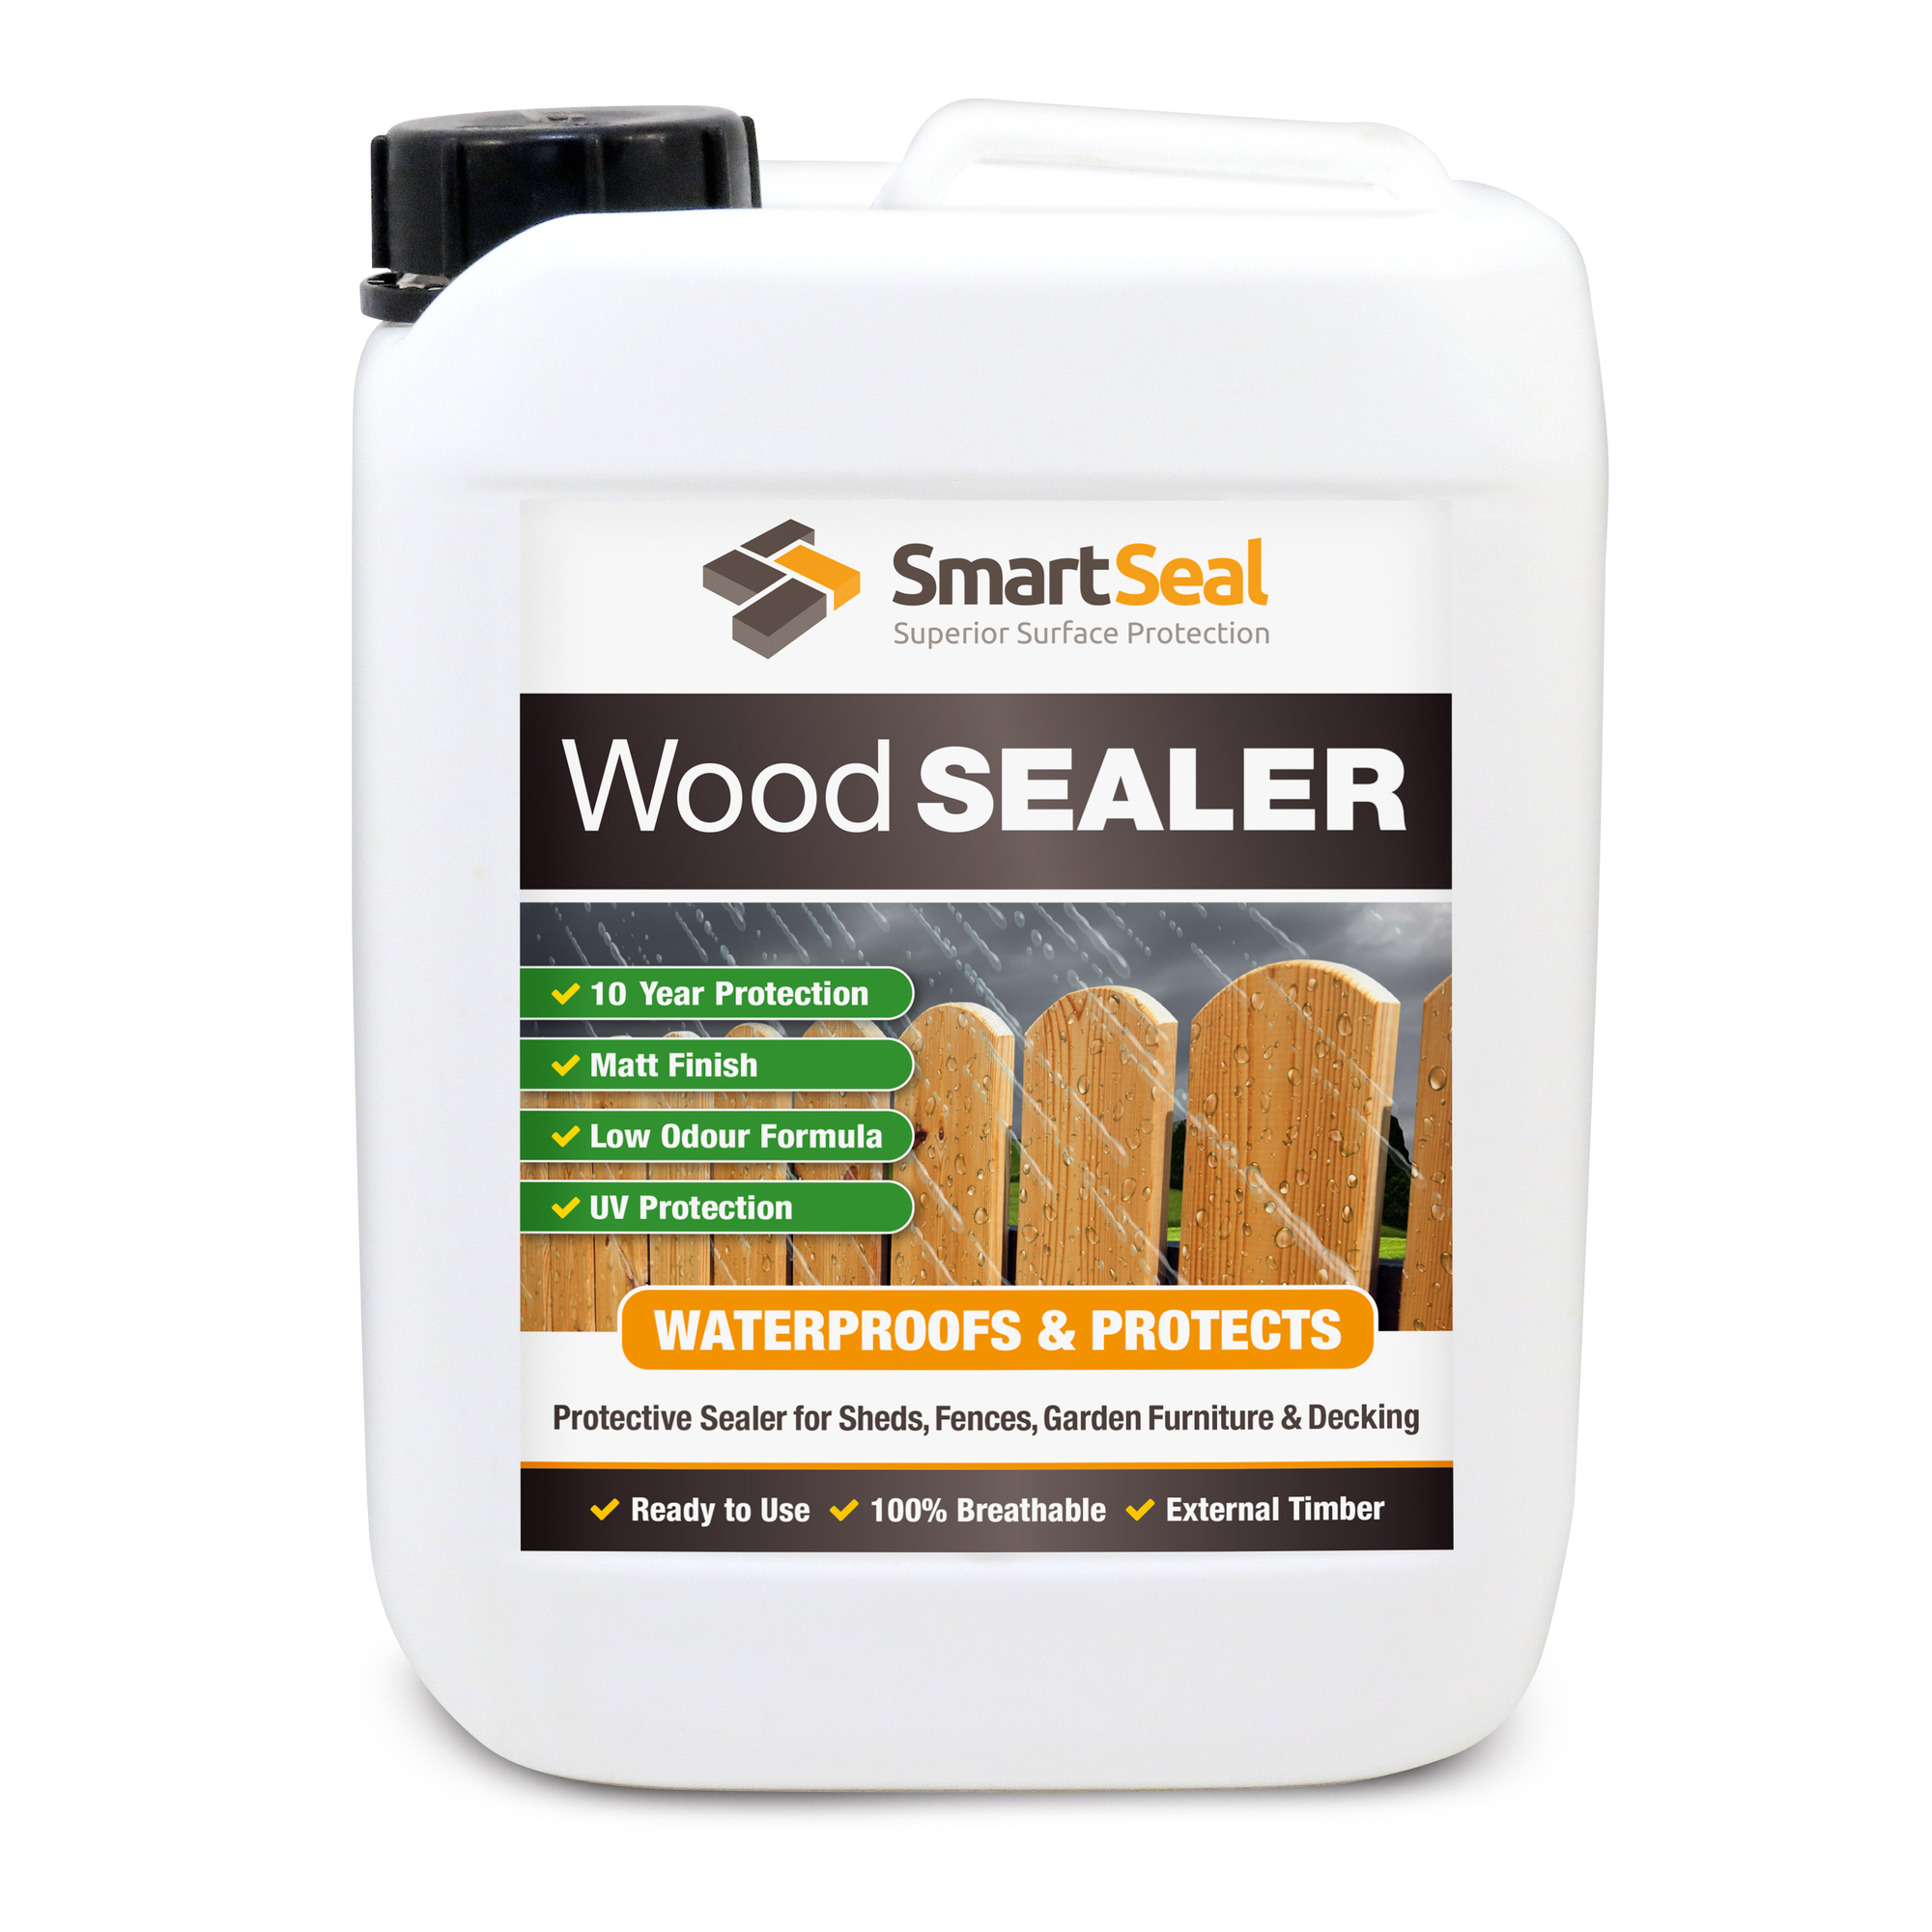  Wood Sealer